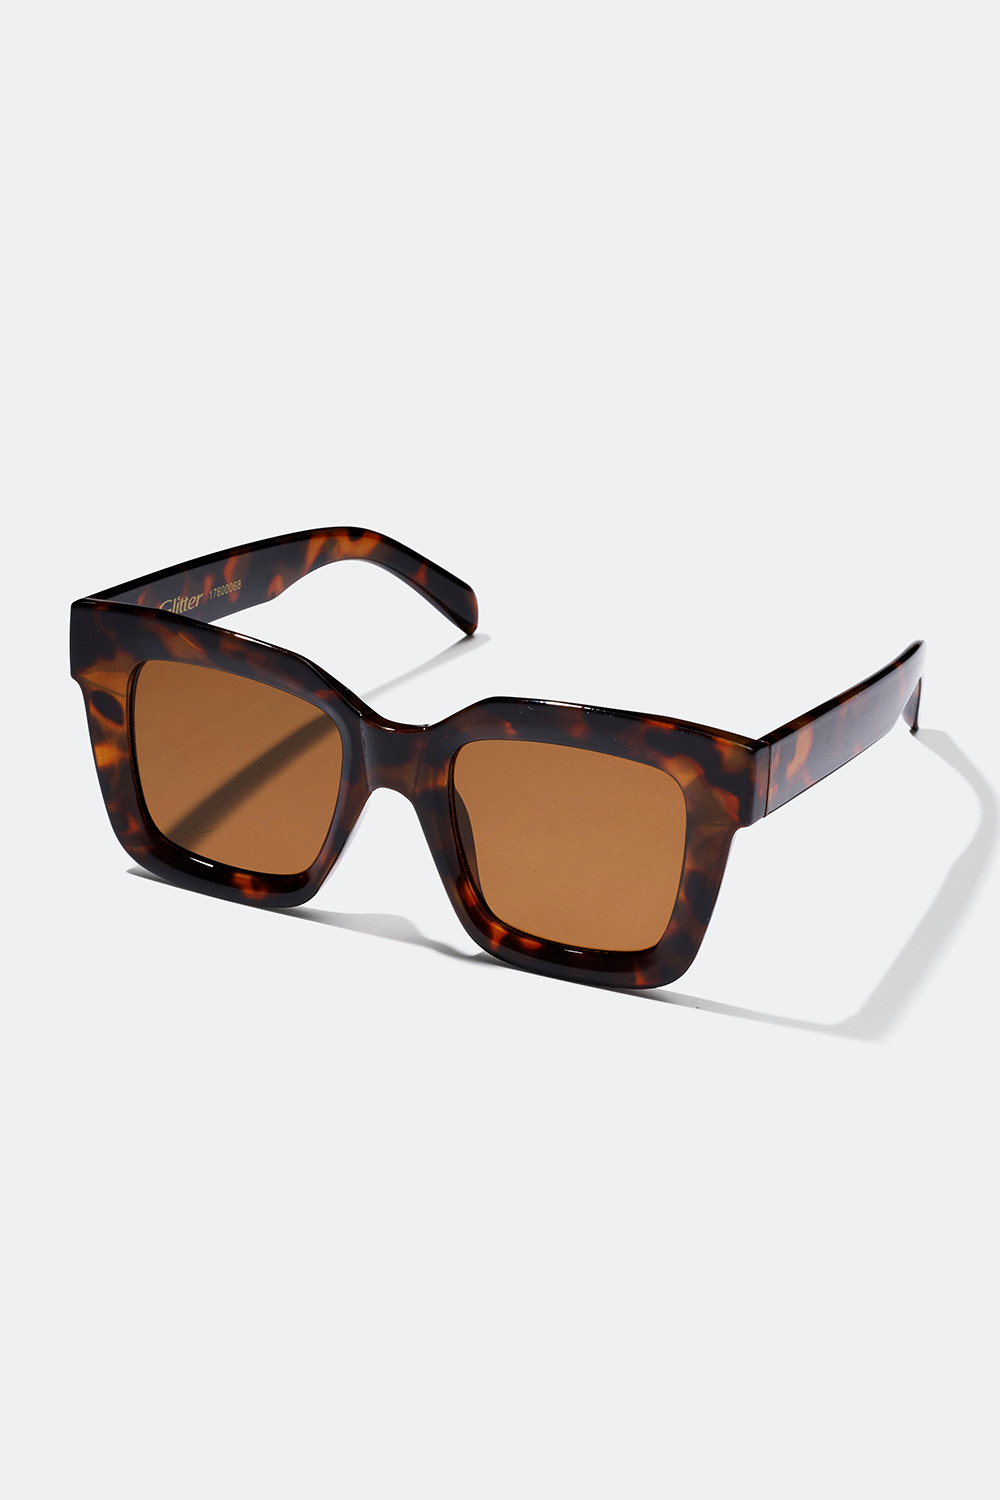 Store brune solbriller med firkantet design i gruppen Solbriller hos Glitter (176000680700)